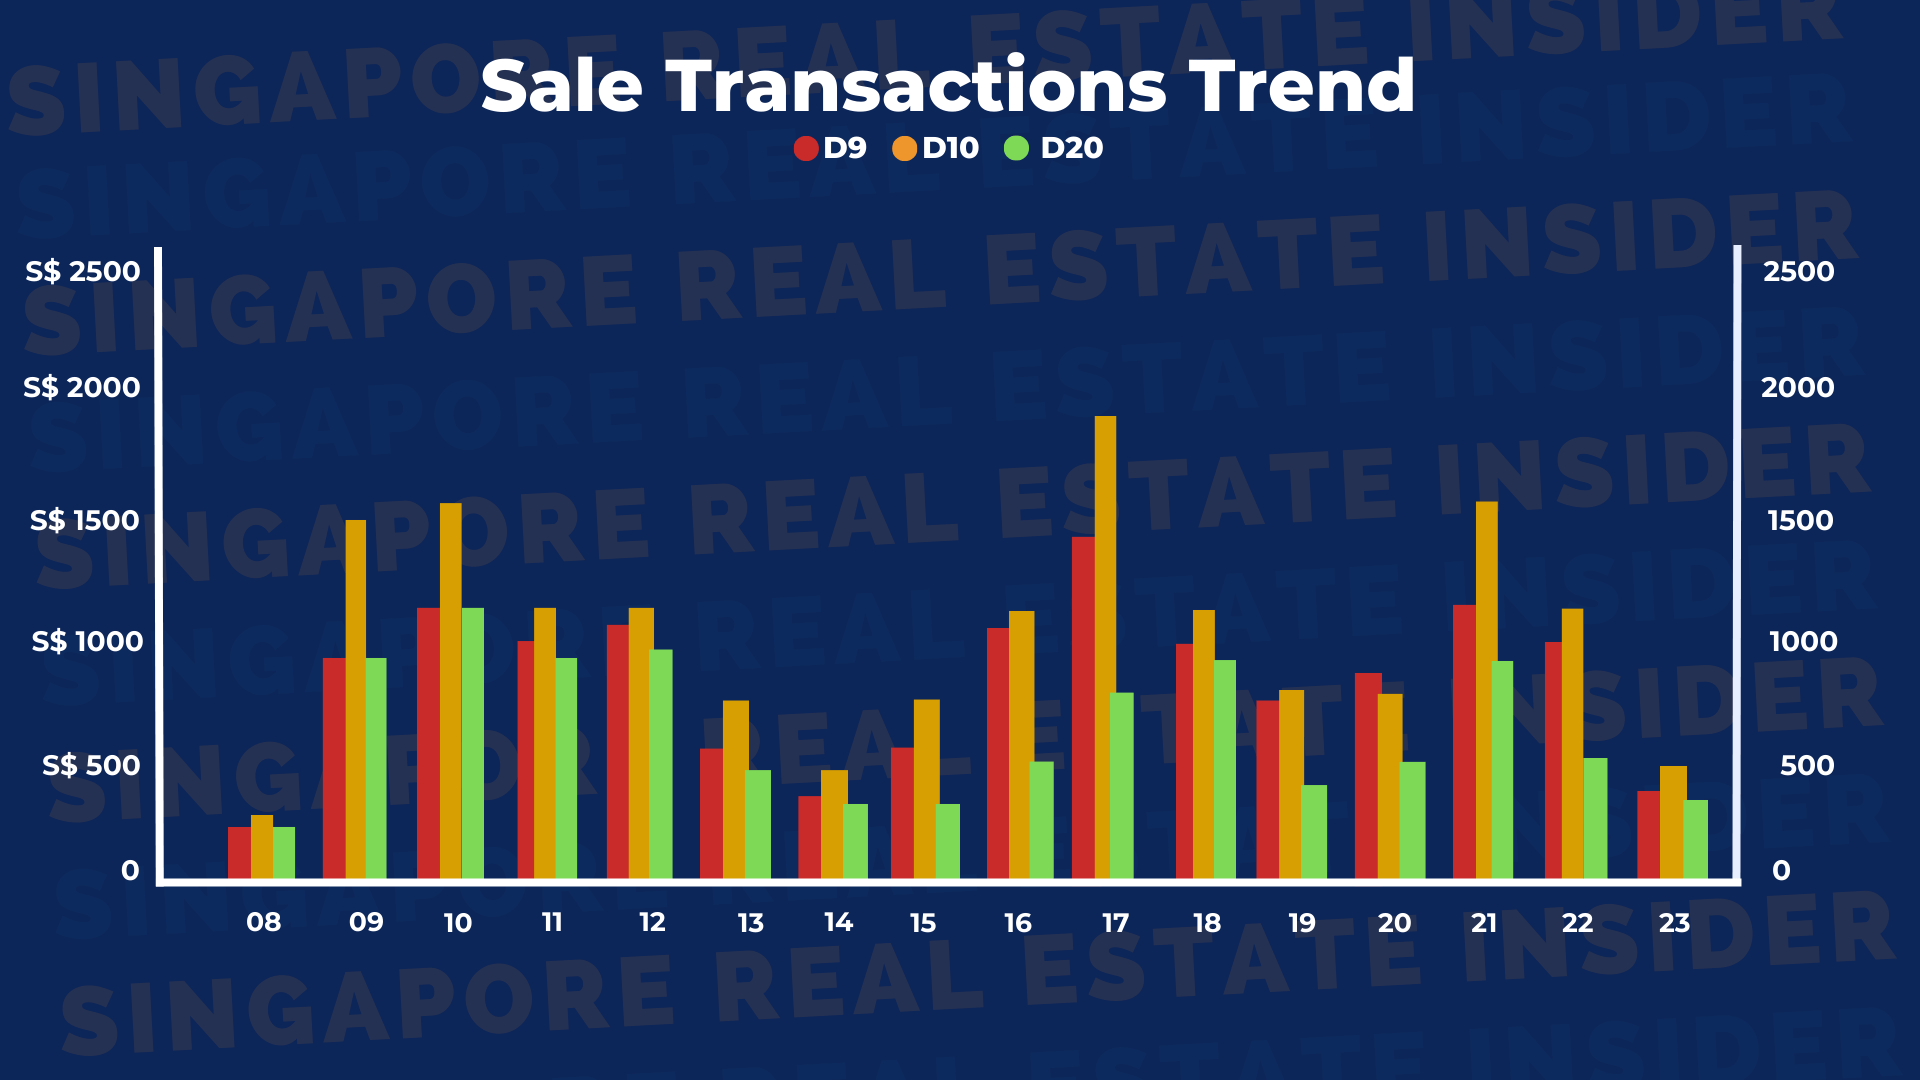 Sales Transactions Trend